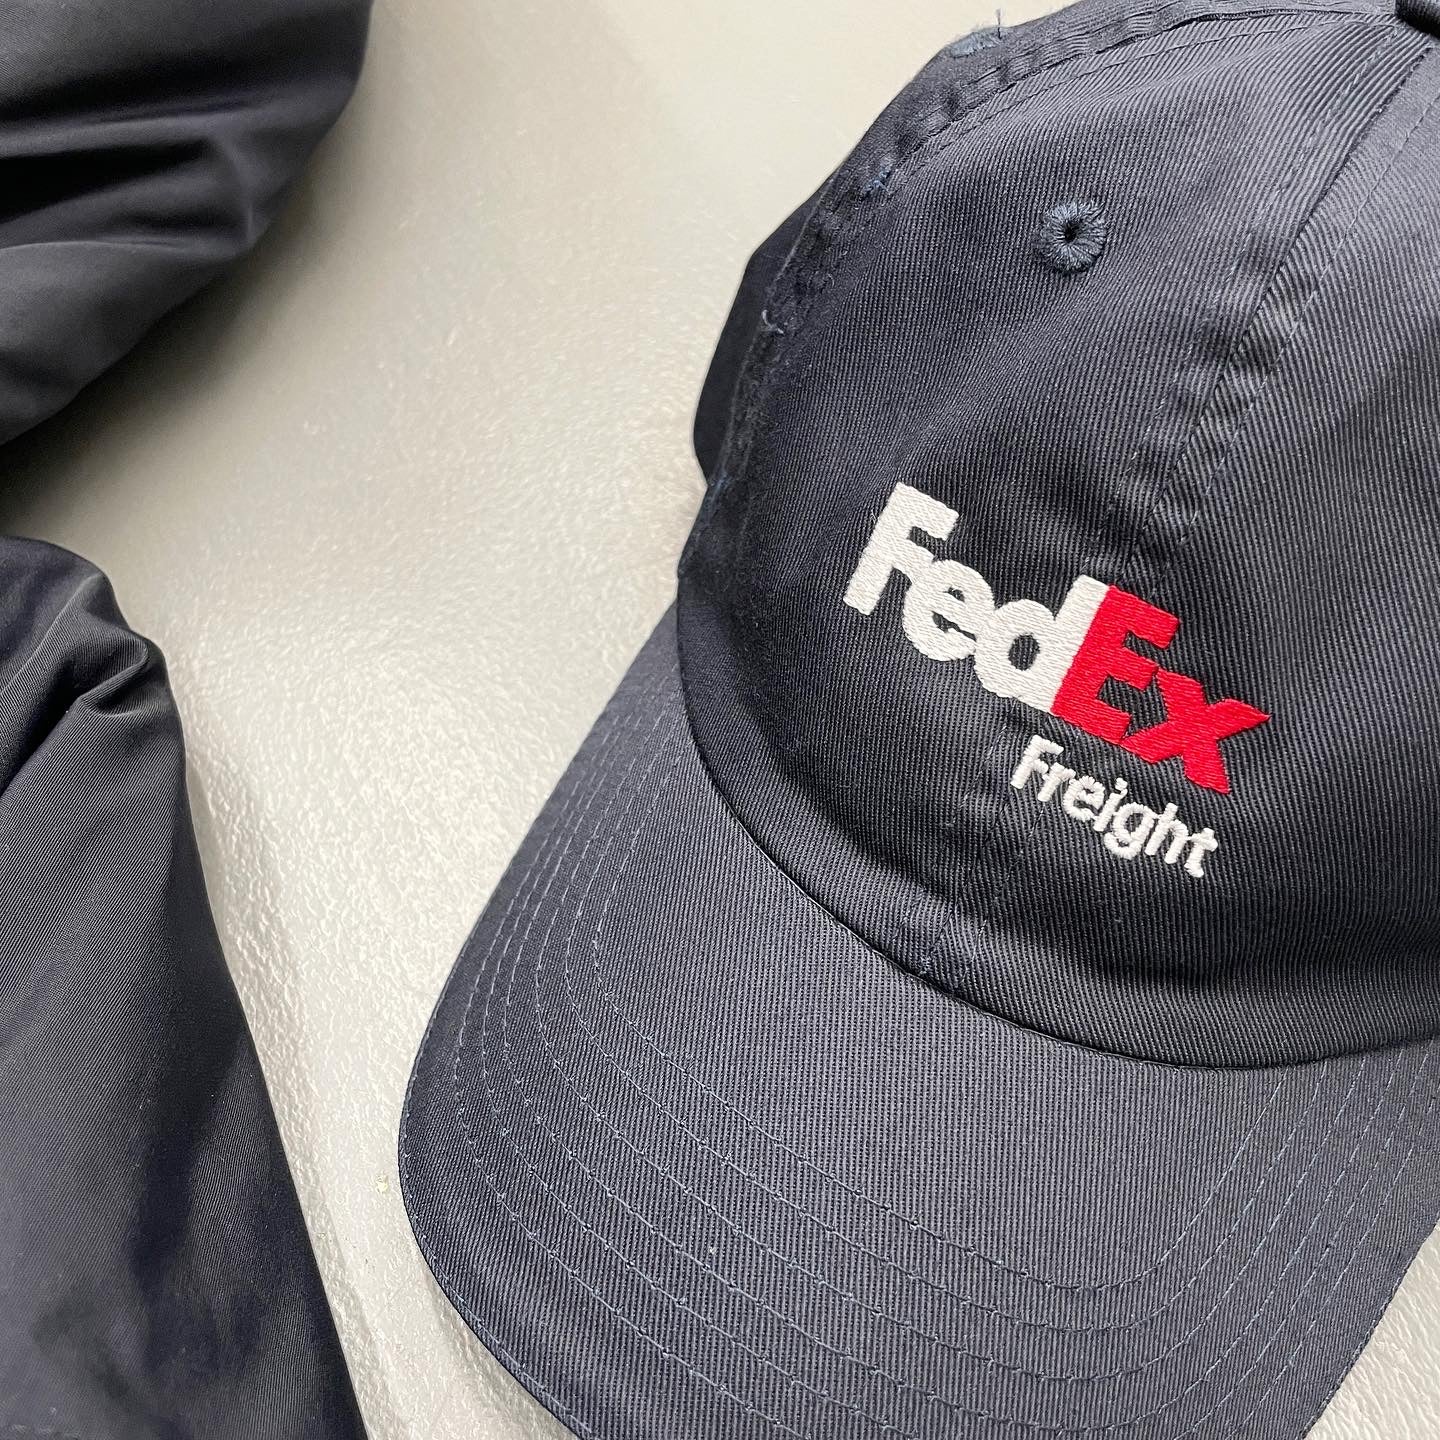 FedEX Freight Staff Cap